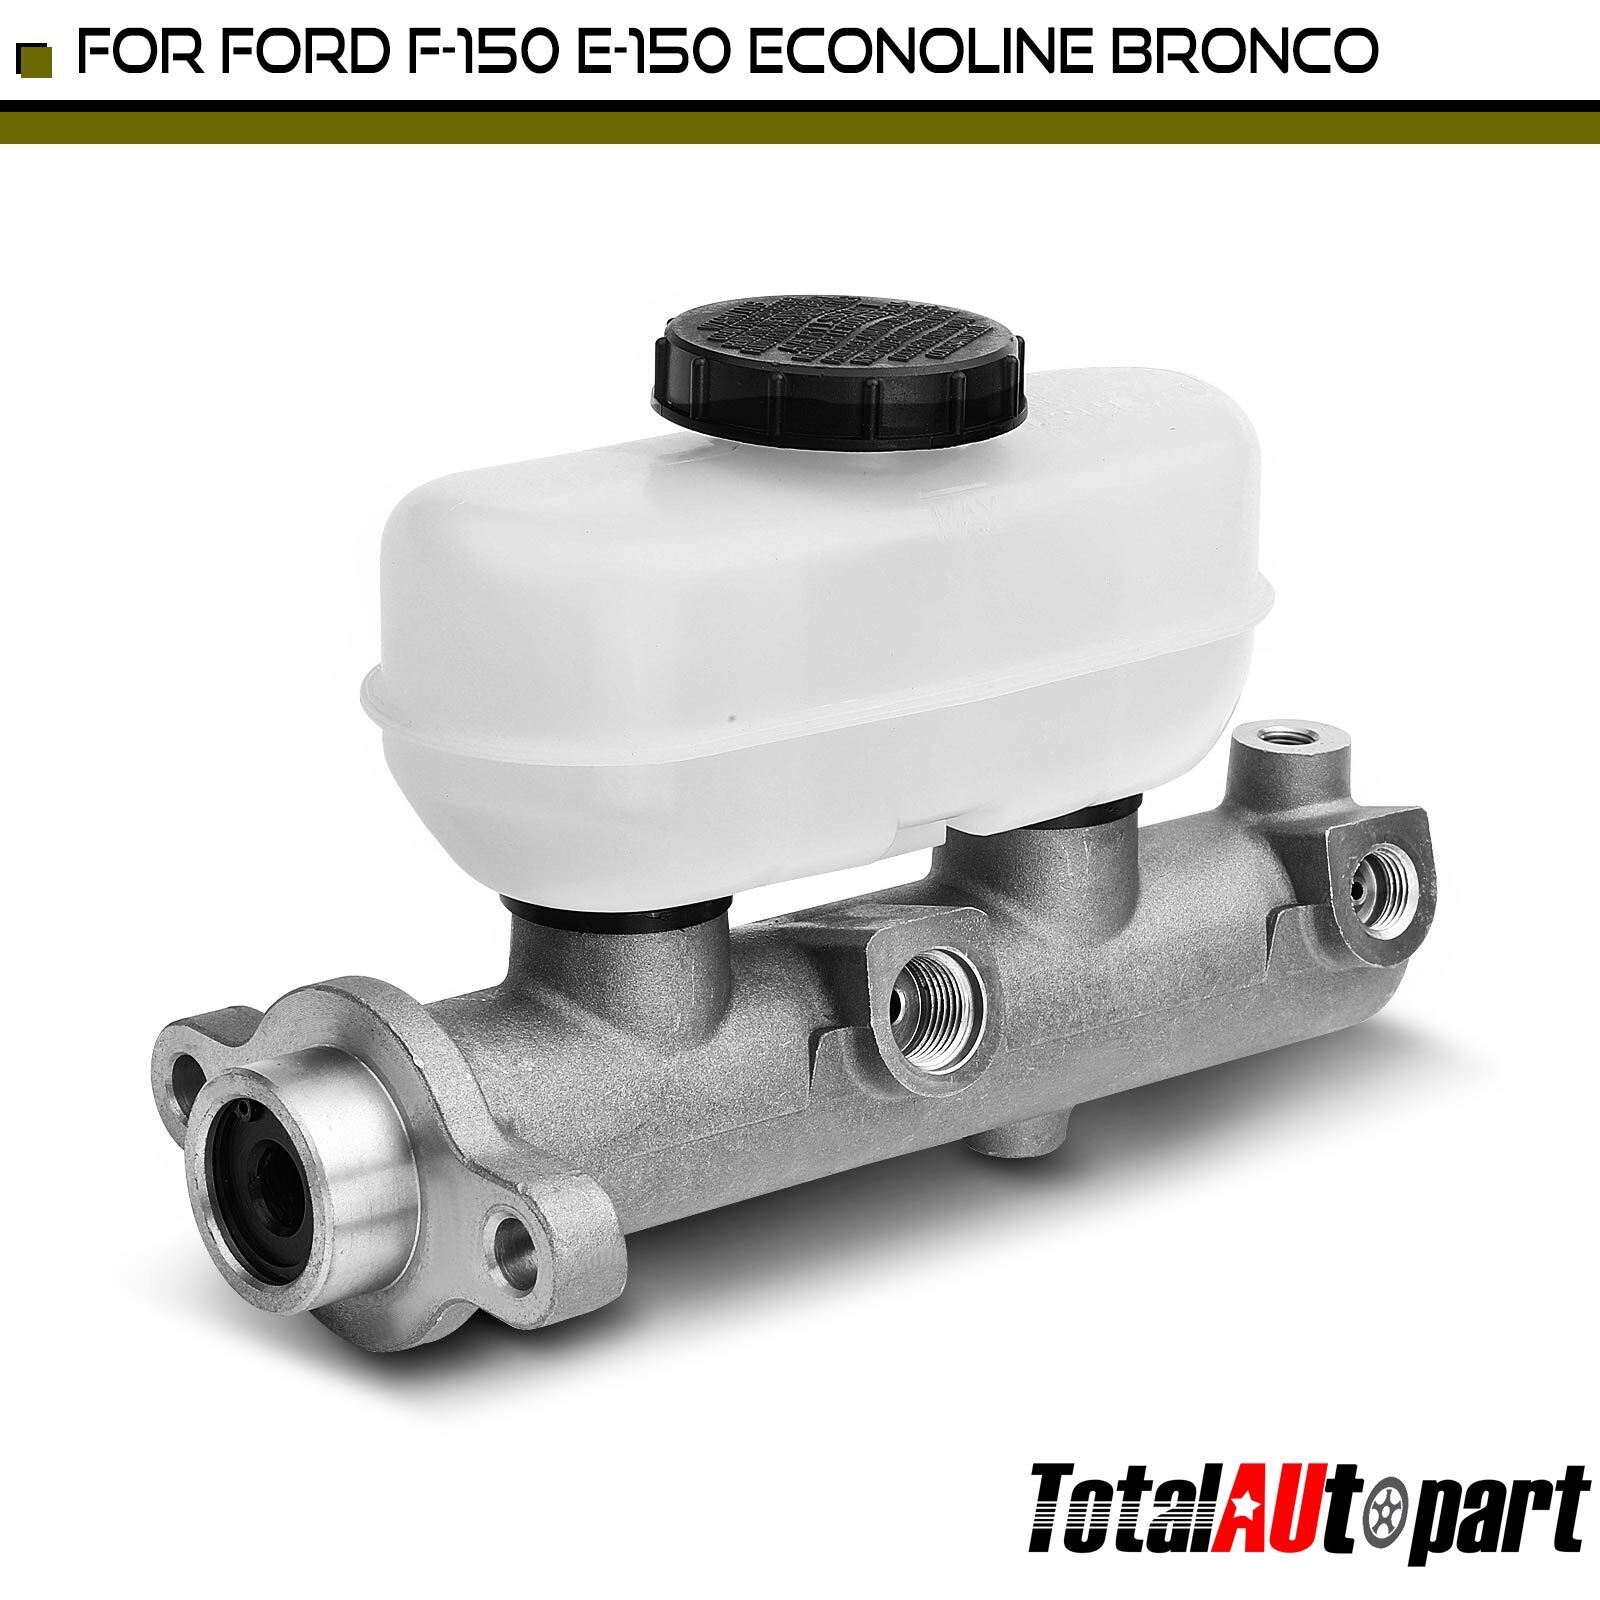 New Brake Master Cylinder w/ Reservoir for Ford F-150 1994-2003 E-150 Econoline